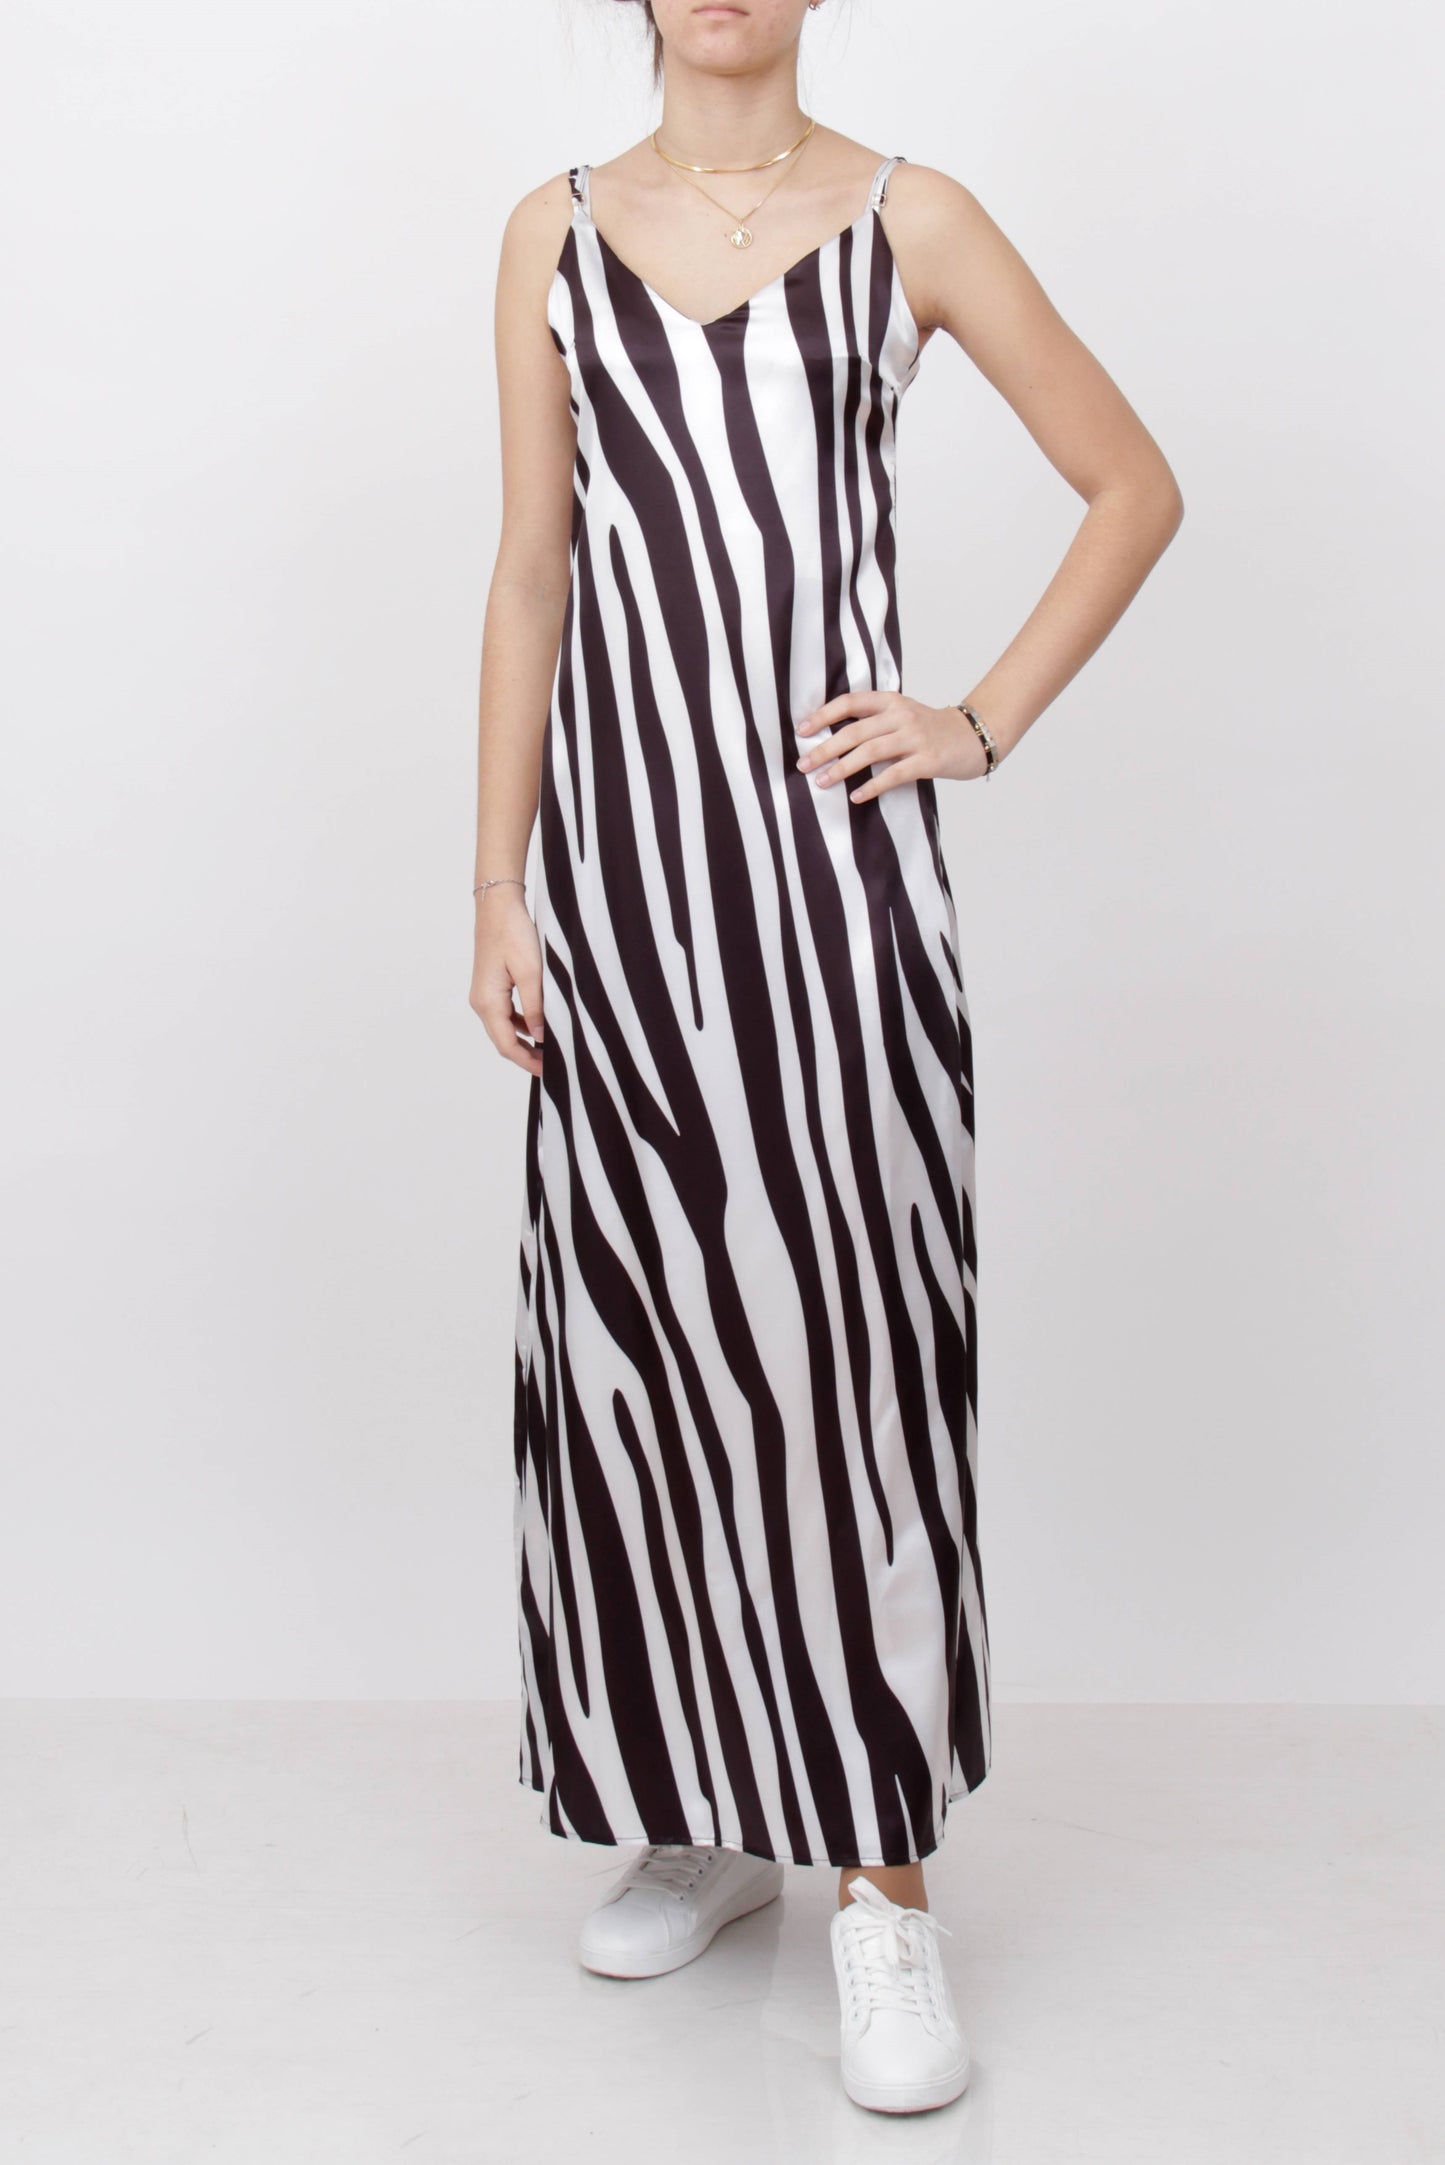 Zebra Slip Dress